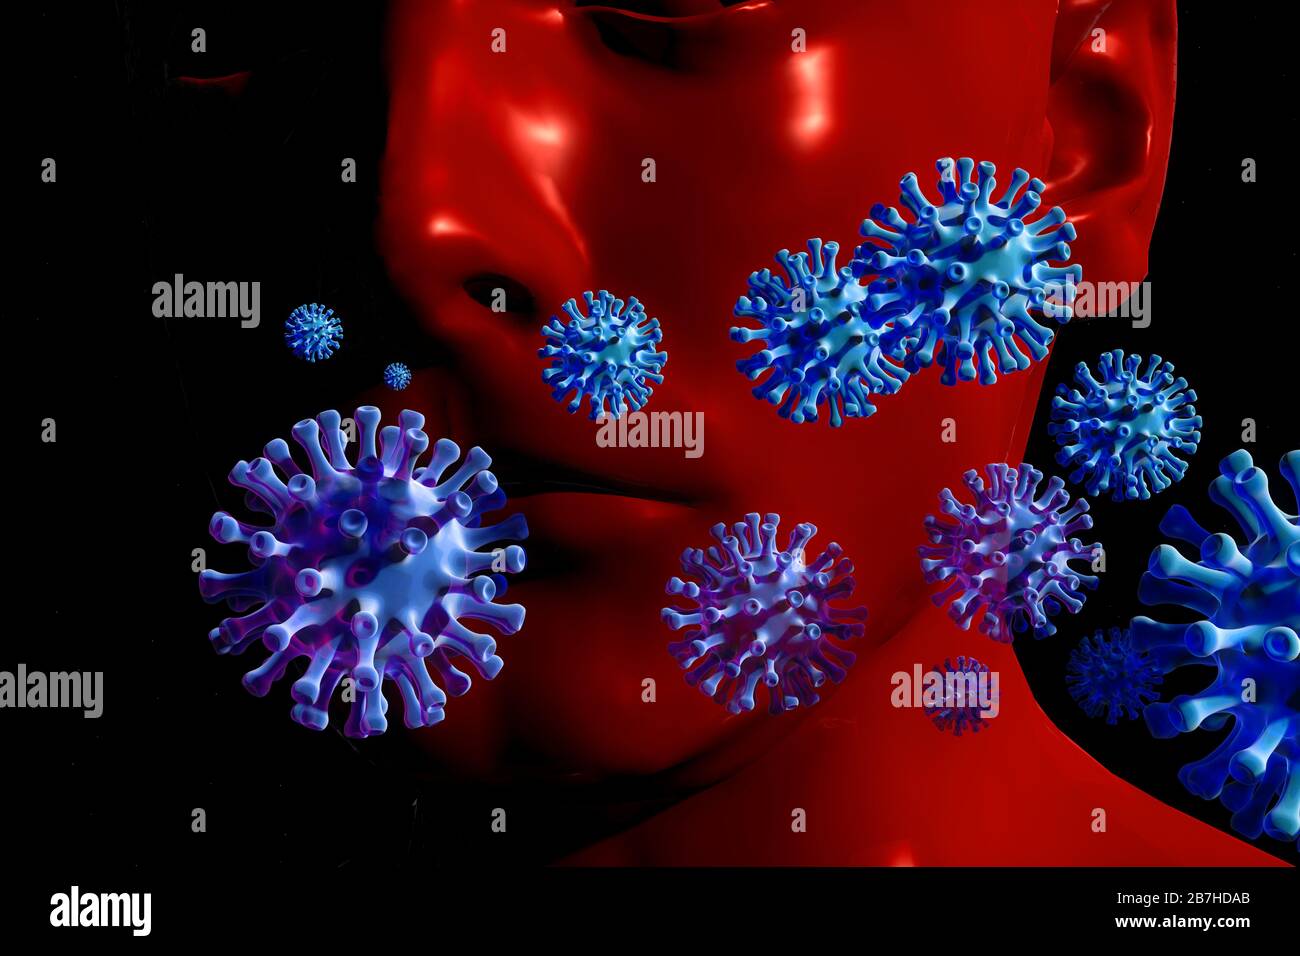 ein fieses Virus befaellt die Welt - Symbolbild: CGI-Visualisierung: Coronavirus Covid 19, SARS 2,Mensch/ a horrible new virus infests planet earth - Stock Photo